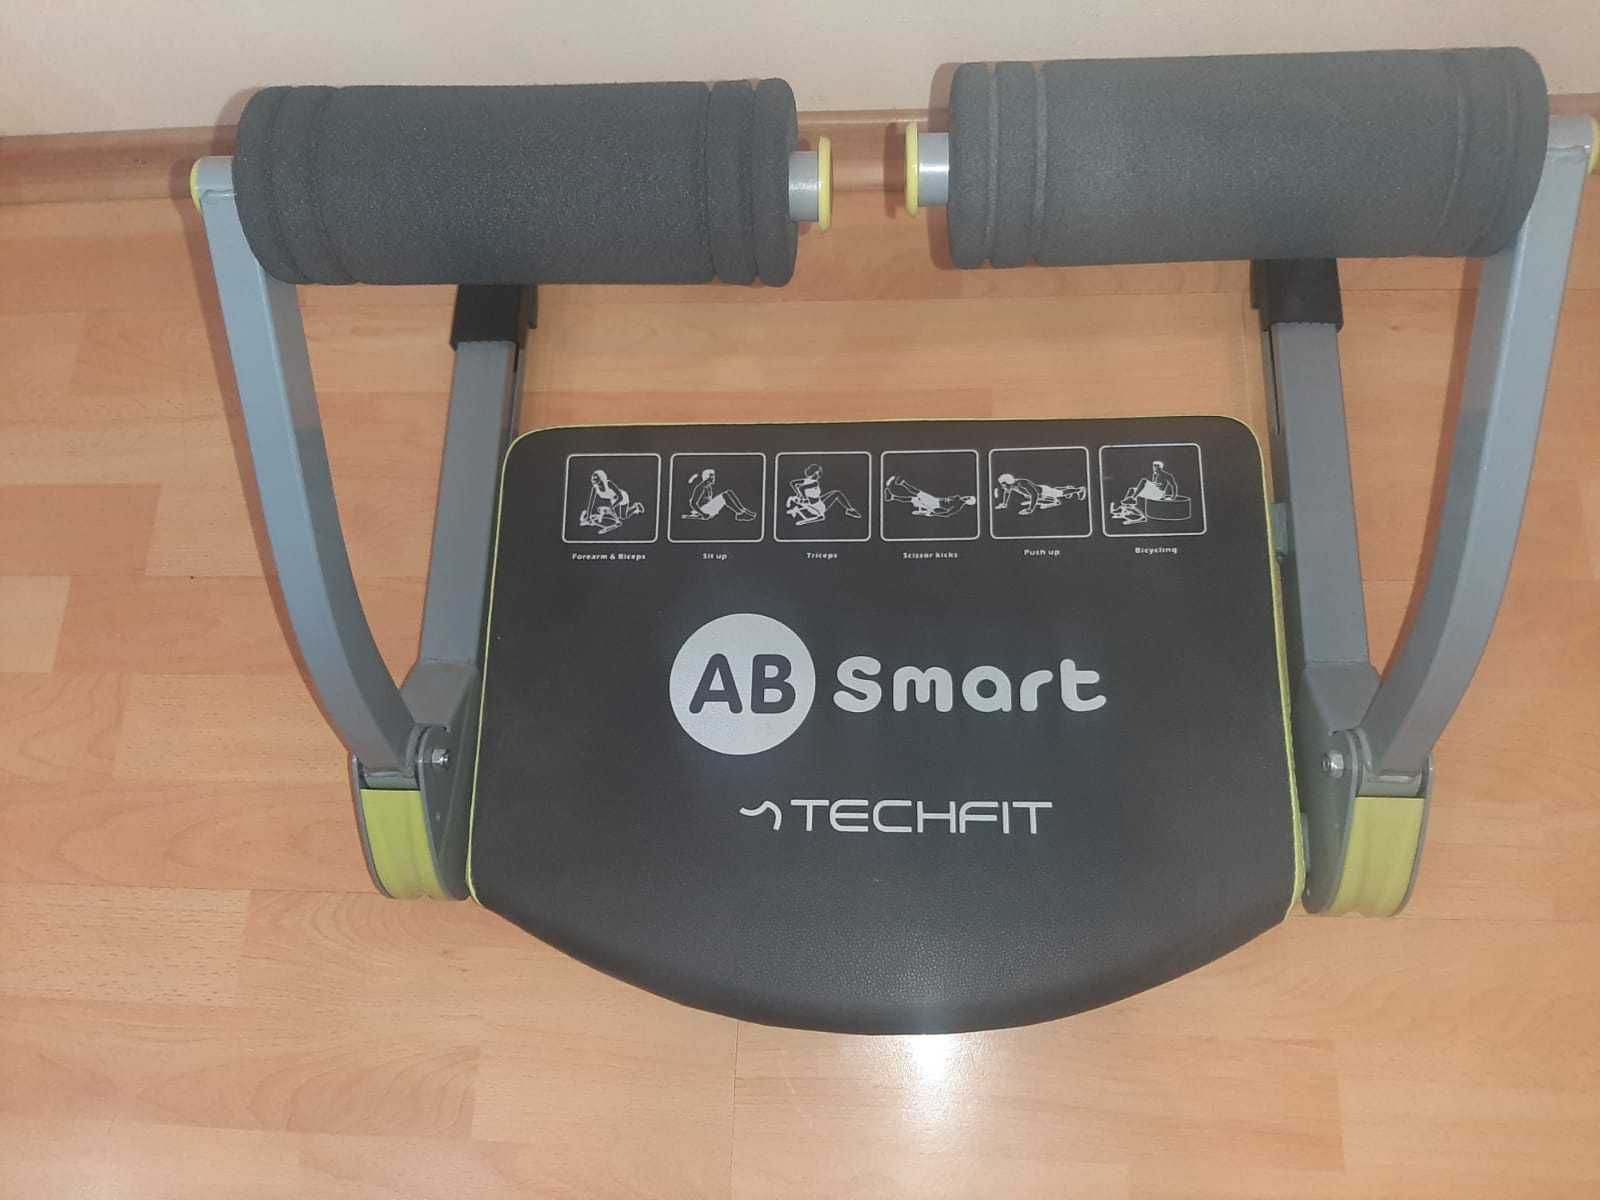 Ab smart techfit